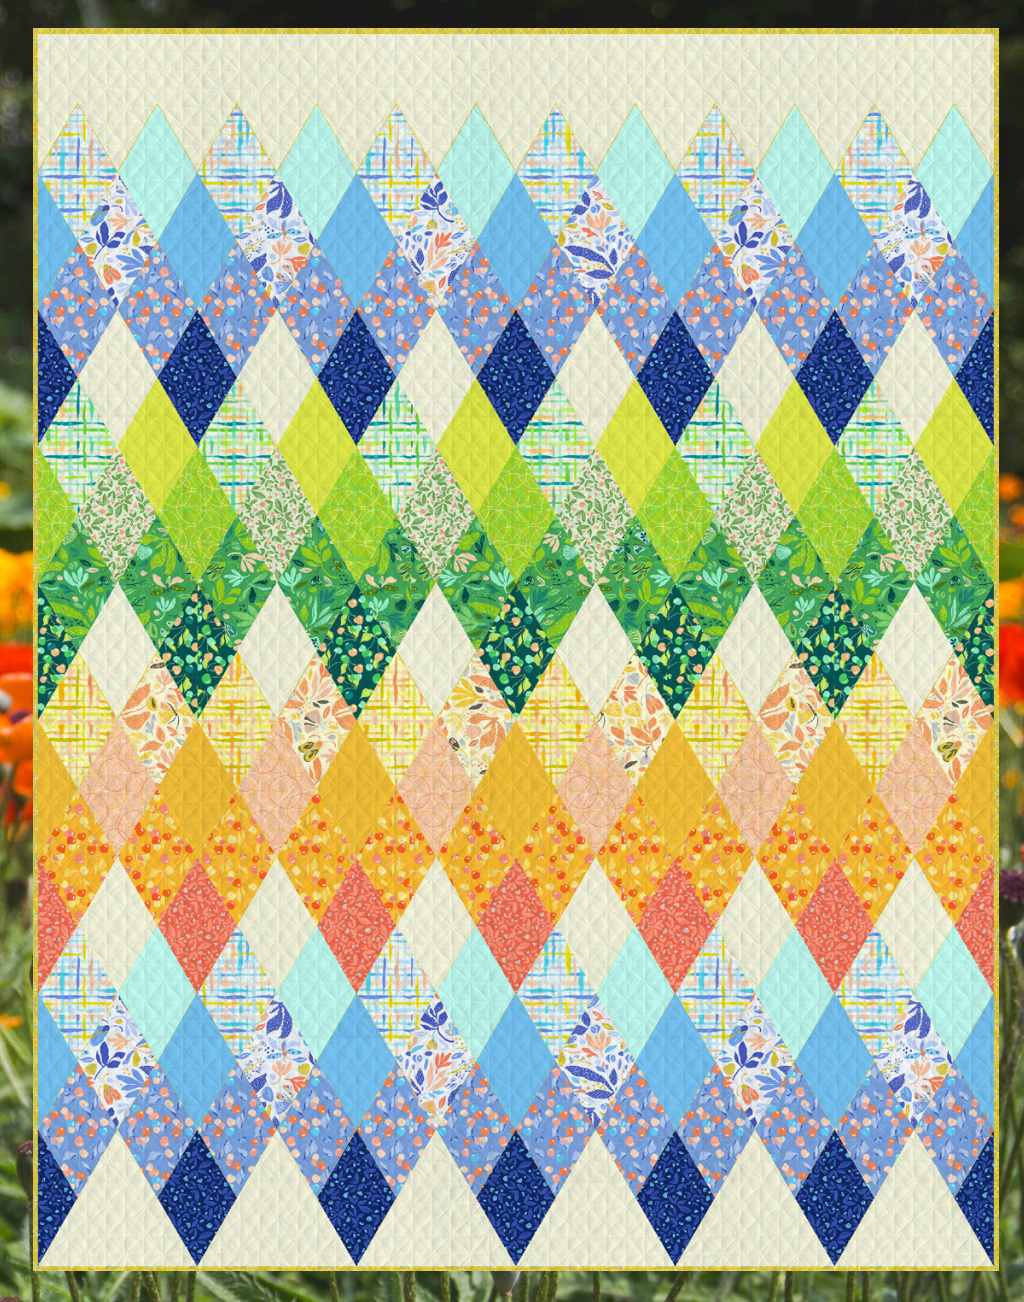 Kaleidoscope Quilt Kit - Summersault - Fabric Only - 53759KAL-KIT